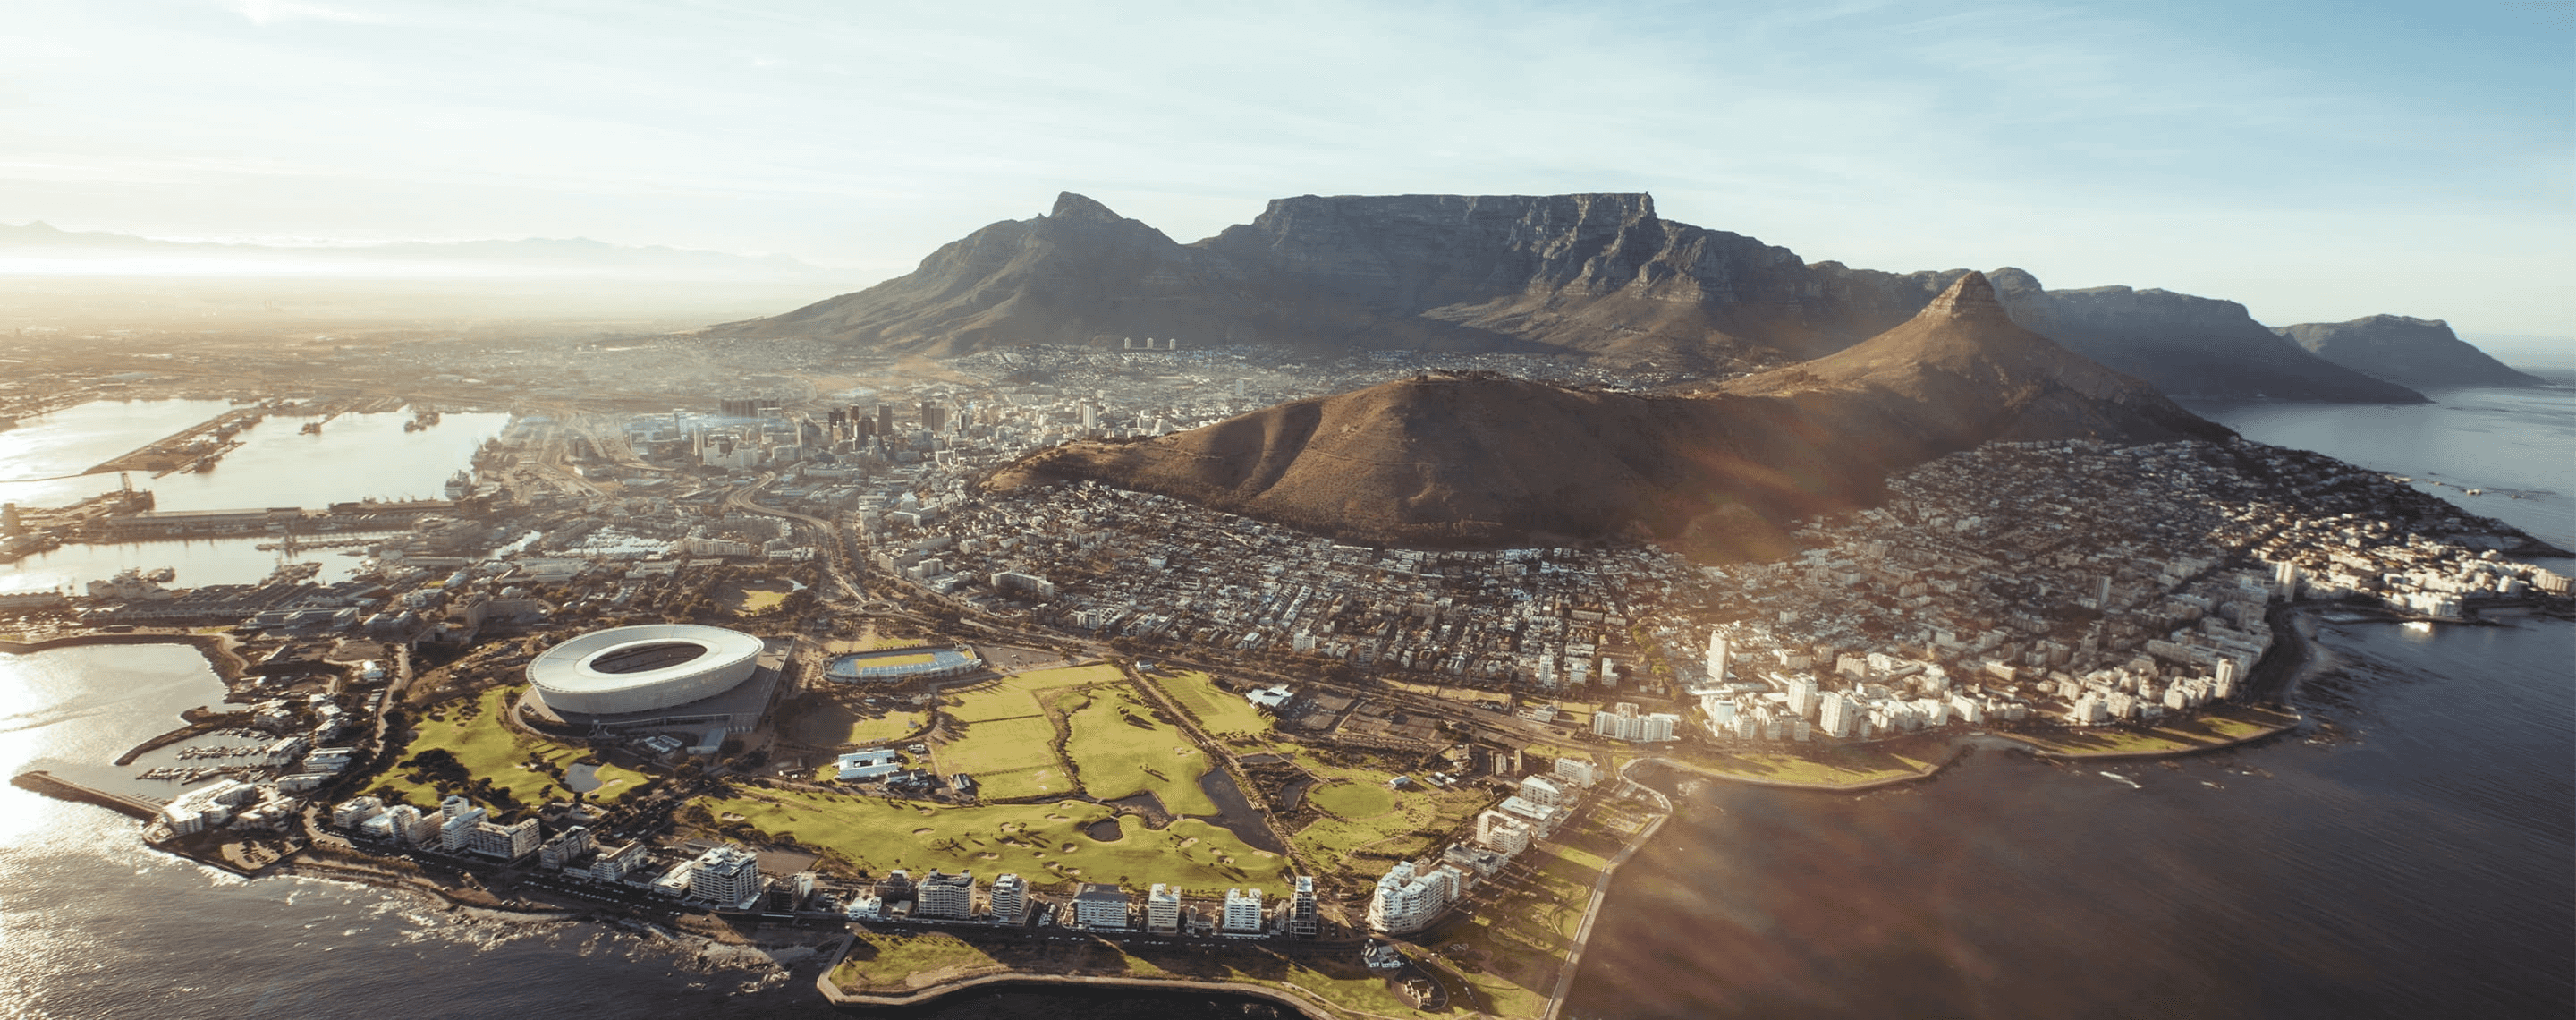 Panoramablick auf Kapstadt mit Tafelberg